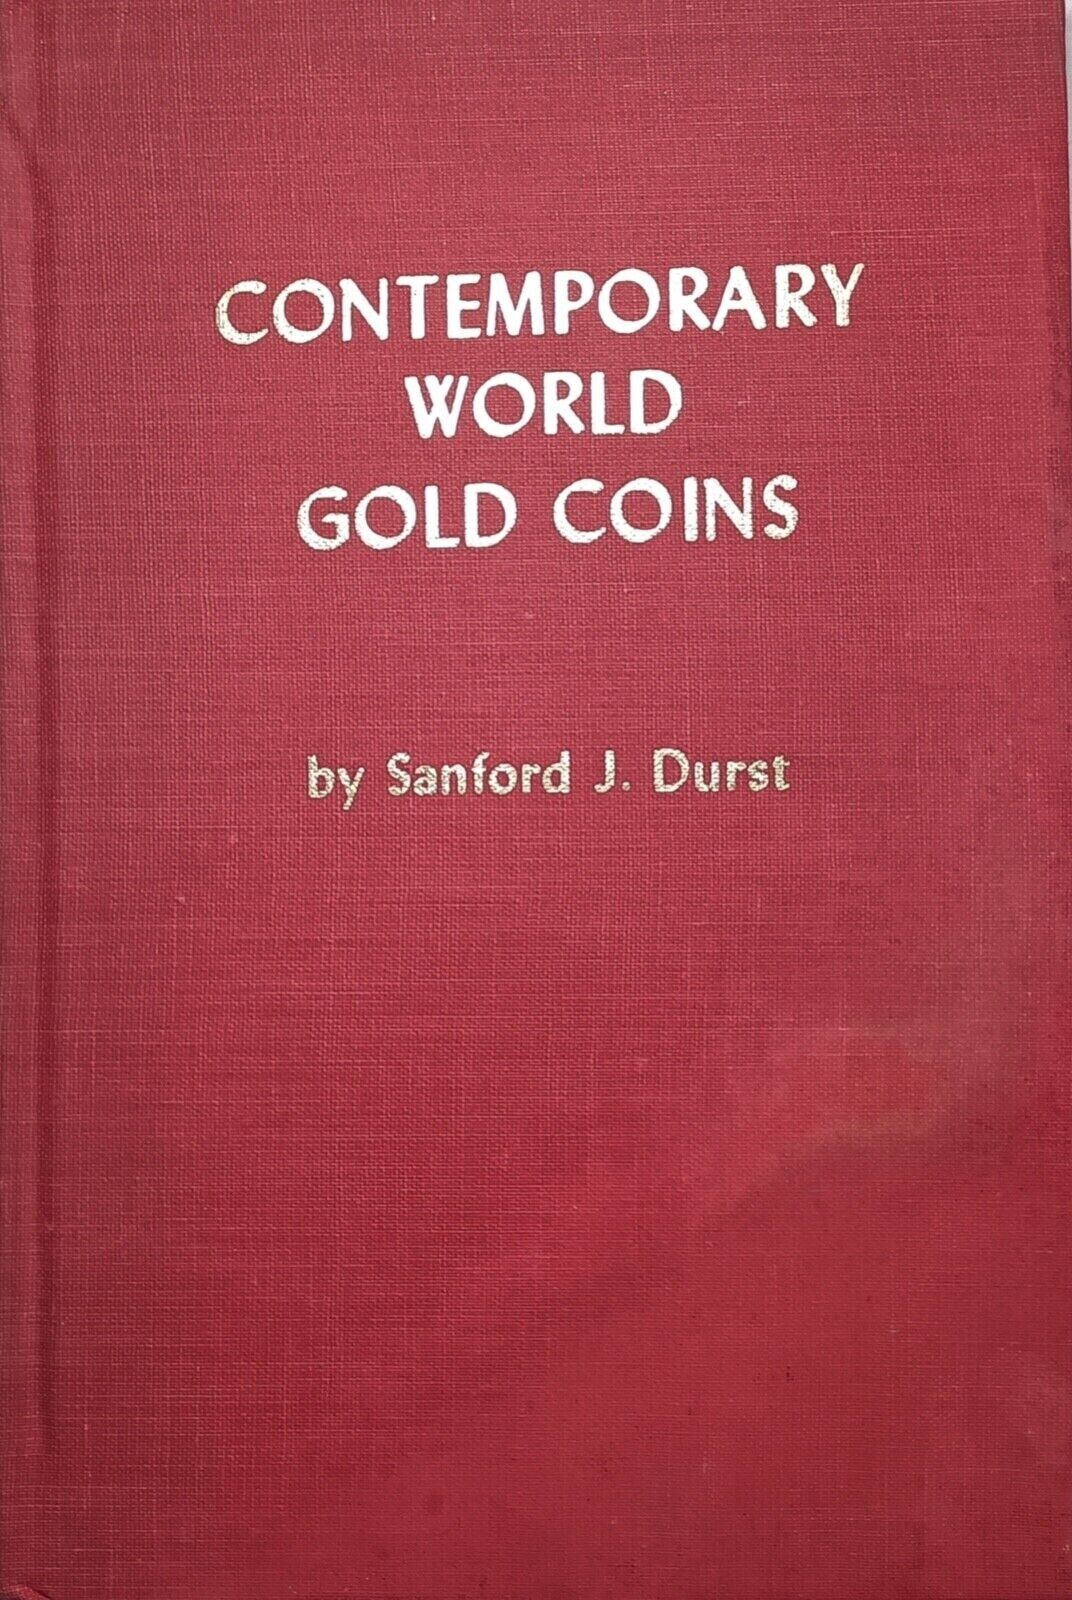 NUMISMATICA: CONTEMPORARY WORLD GOLD COINS BY SANFORD J. DURST 1934 …